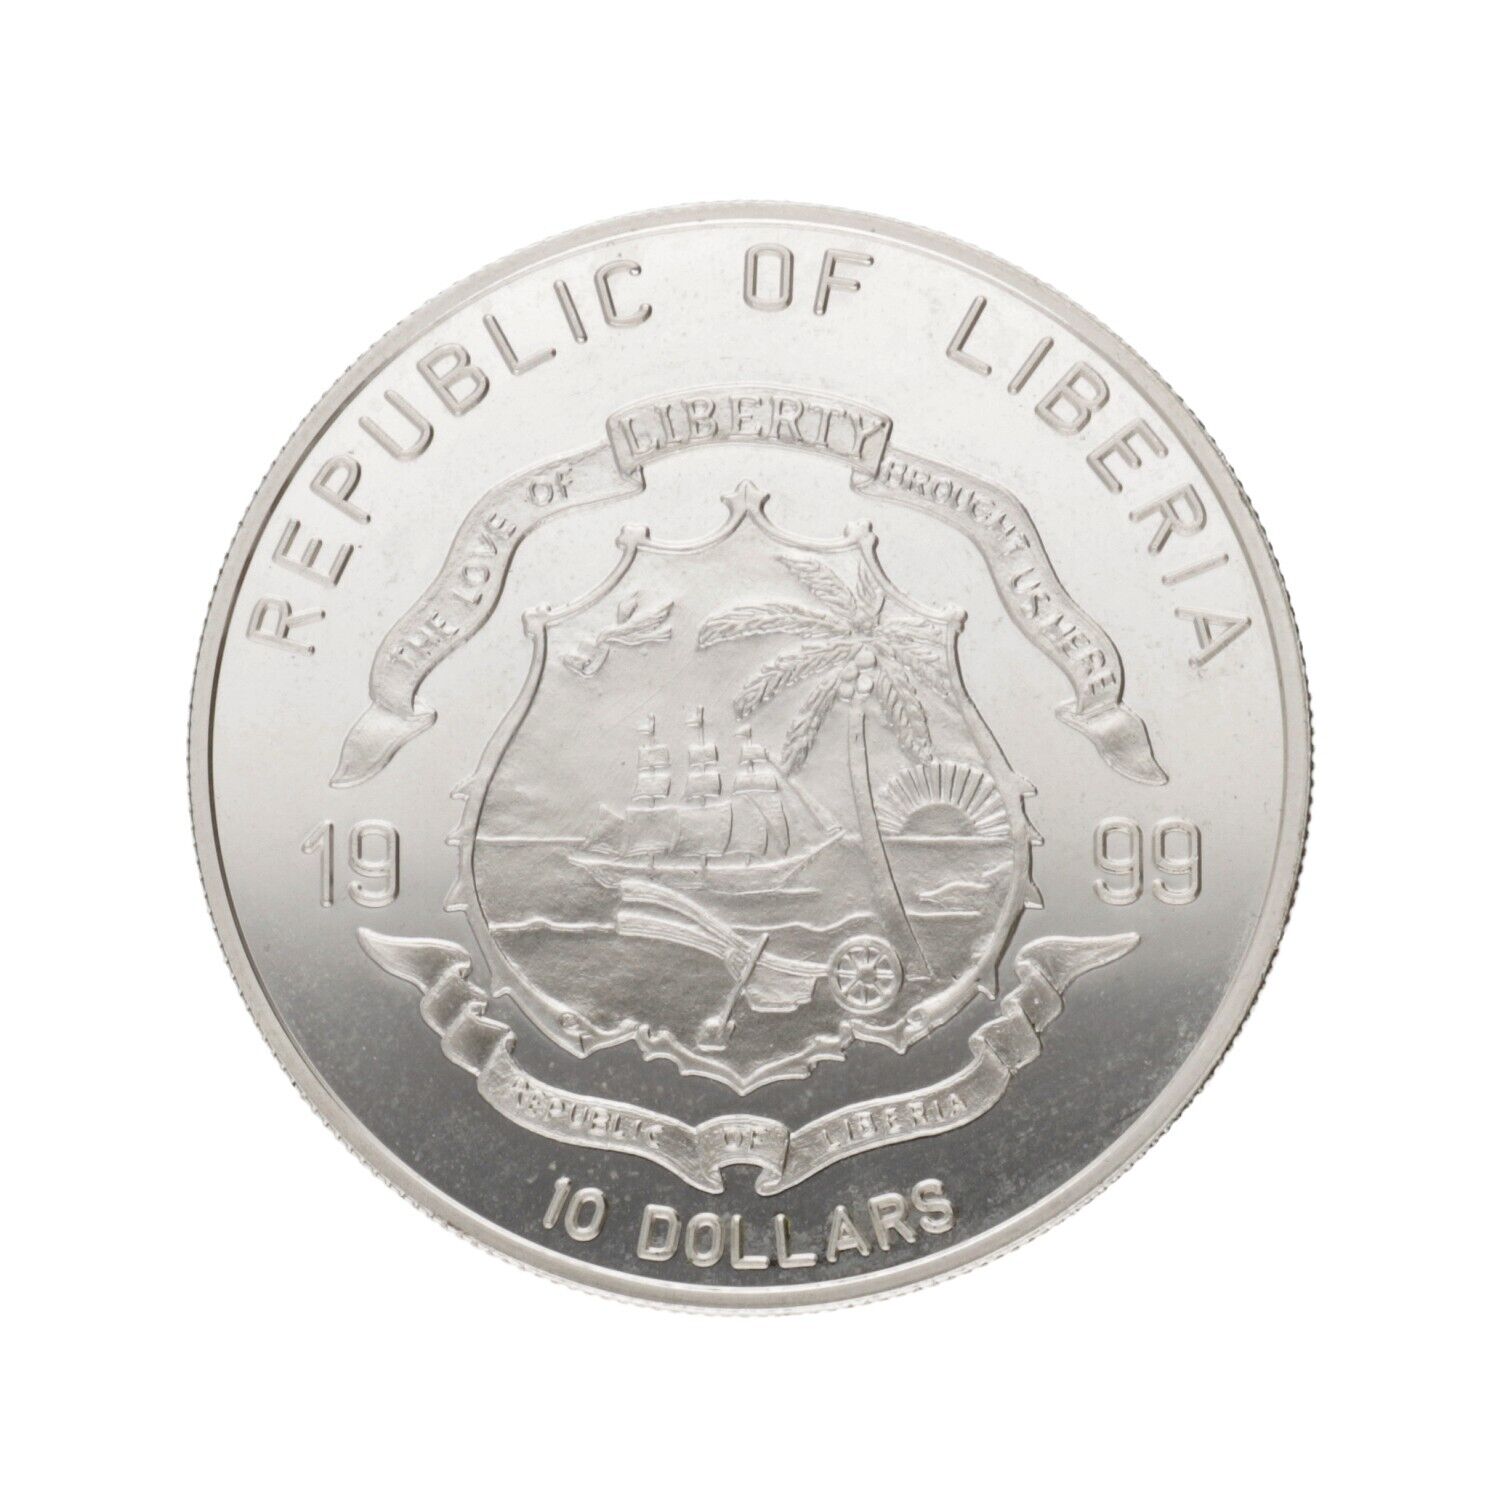 Liberia - 10 Dollars Silver Coin - 